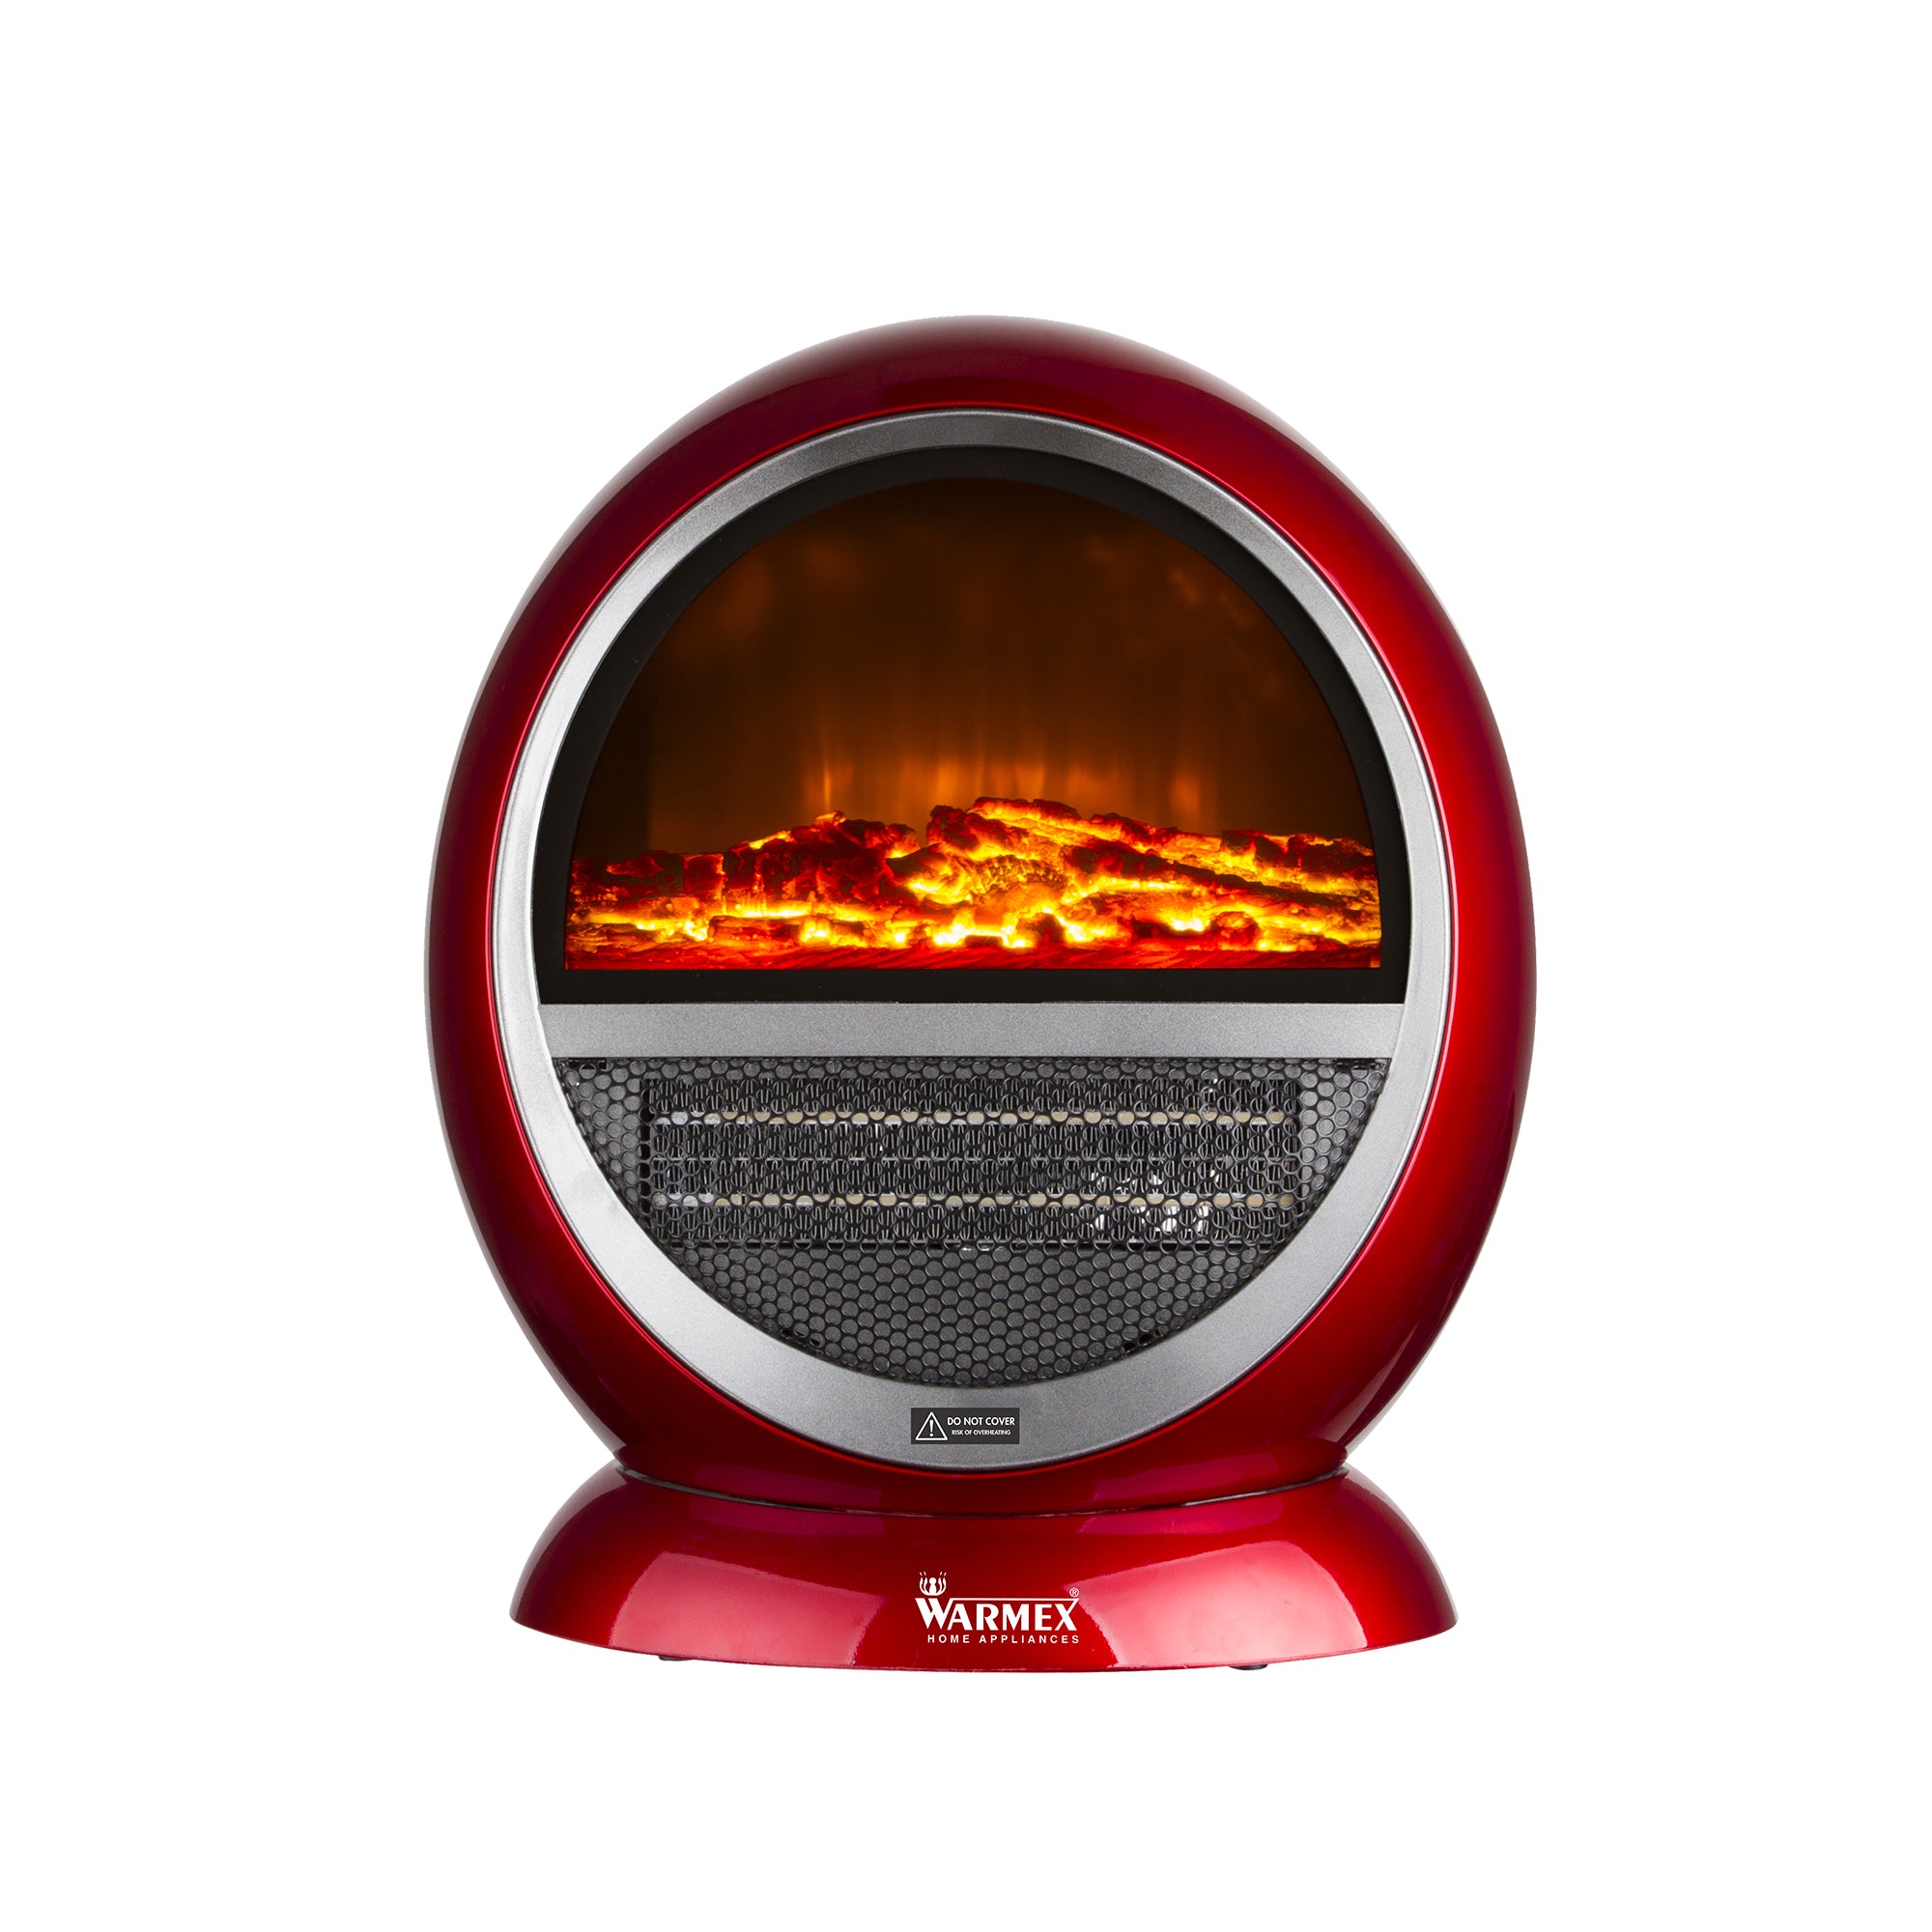 Warmex 750/1500 Watts Room Heater BONFIRE (RED & SILVER) warmexhomeappliances2